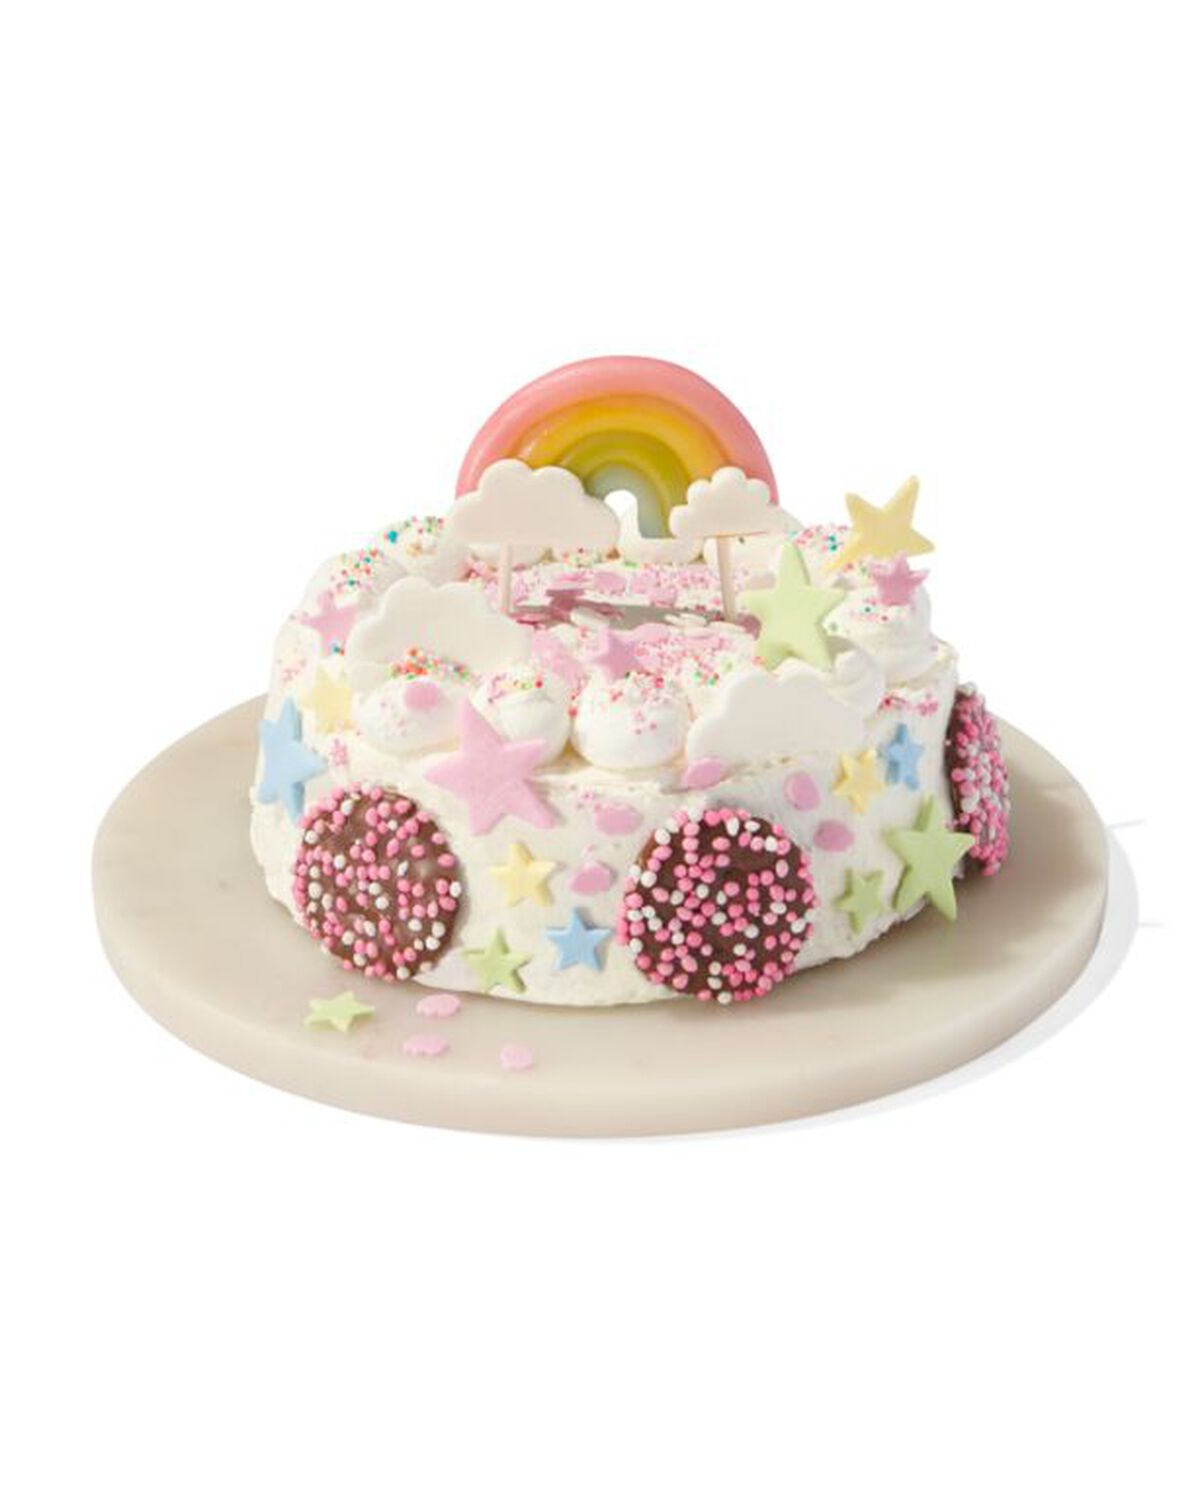 décoration gâteau bébé rose - 200005 - HEMA